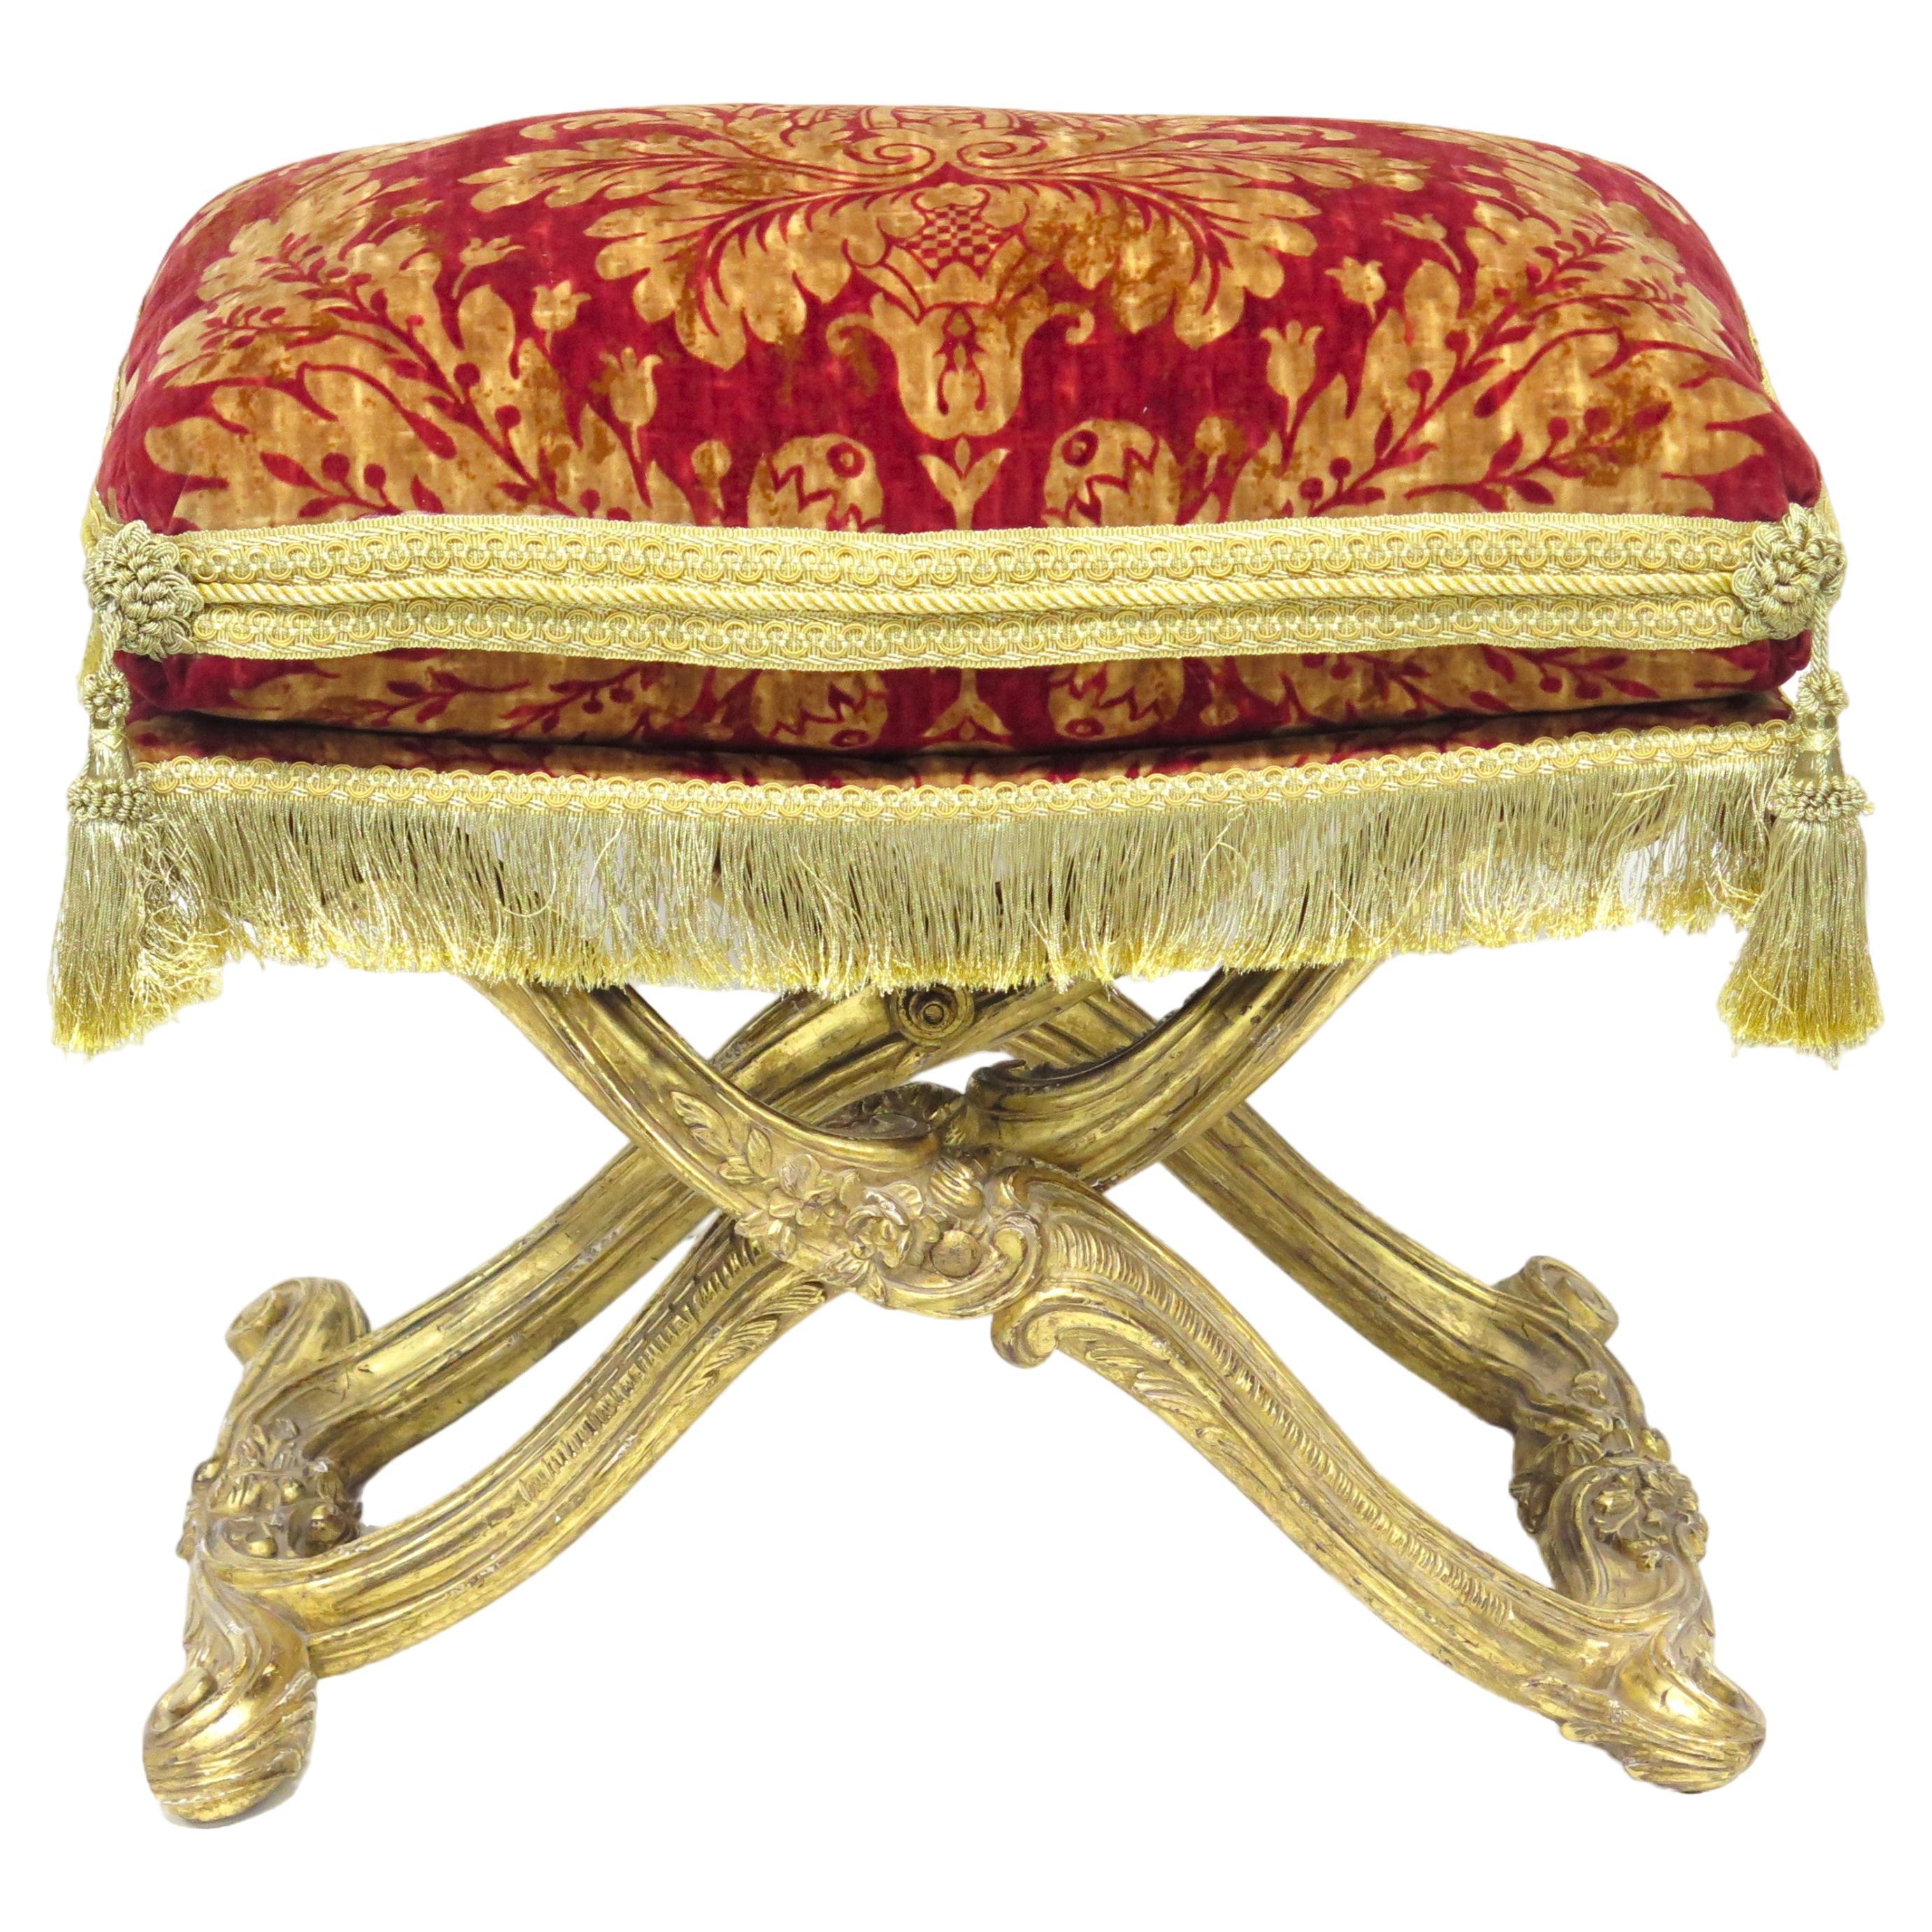 X-förmiger klappbarer Hocker / Curule-Sitz aus vergoldetem Holz im Louis XV.-Stil